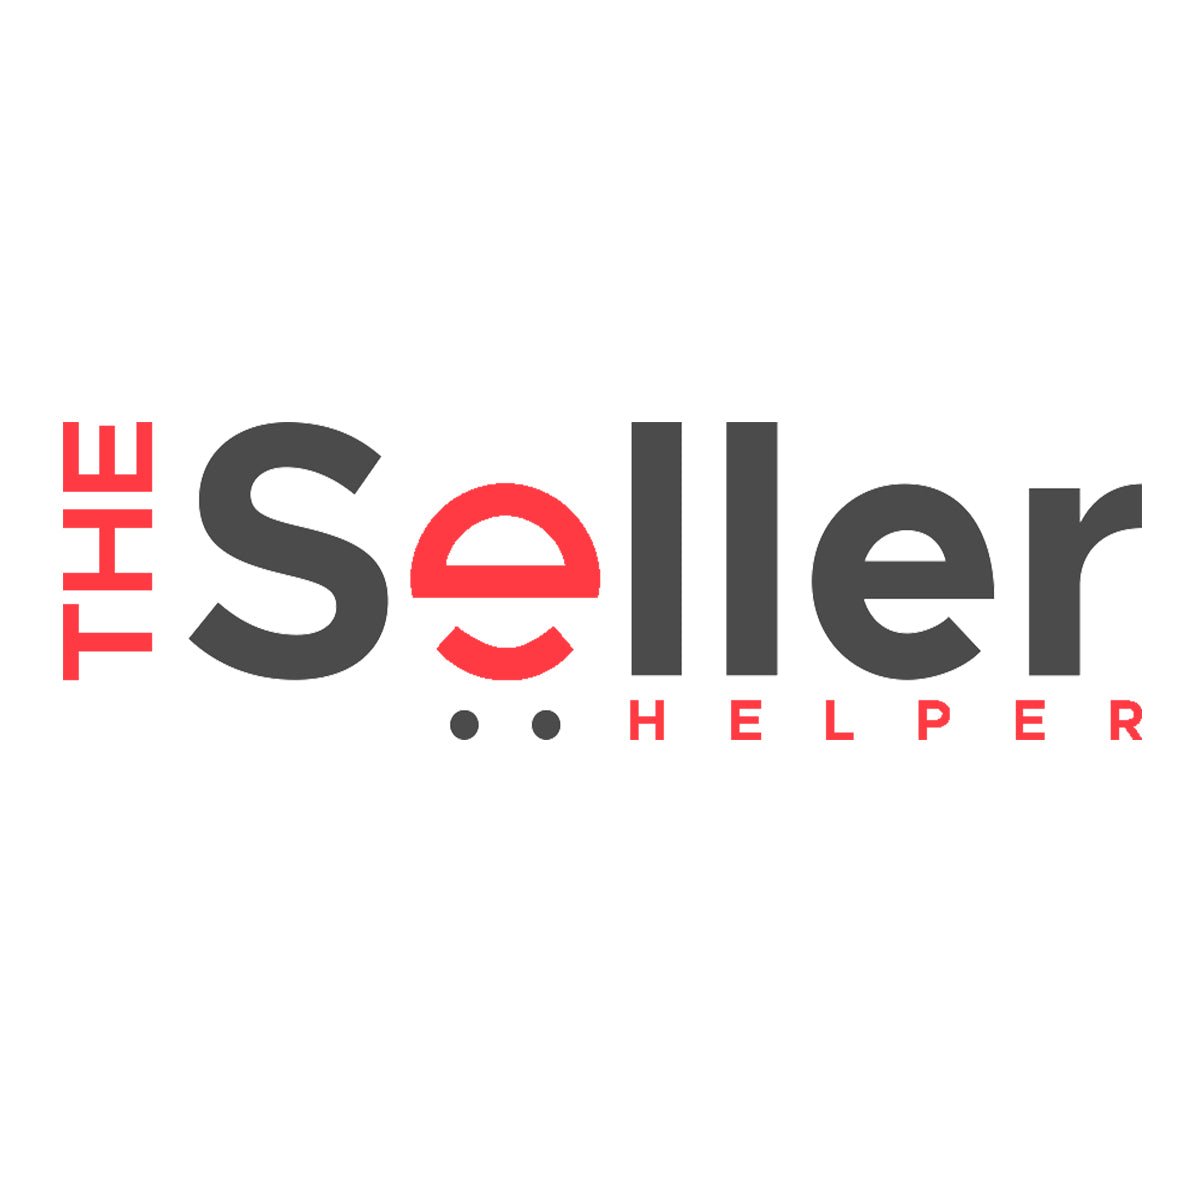 The Seller Helper